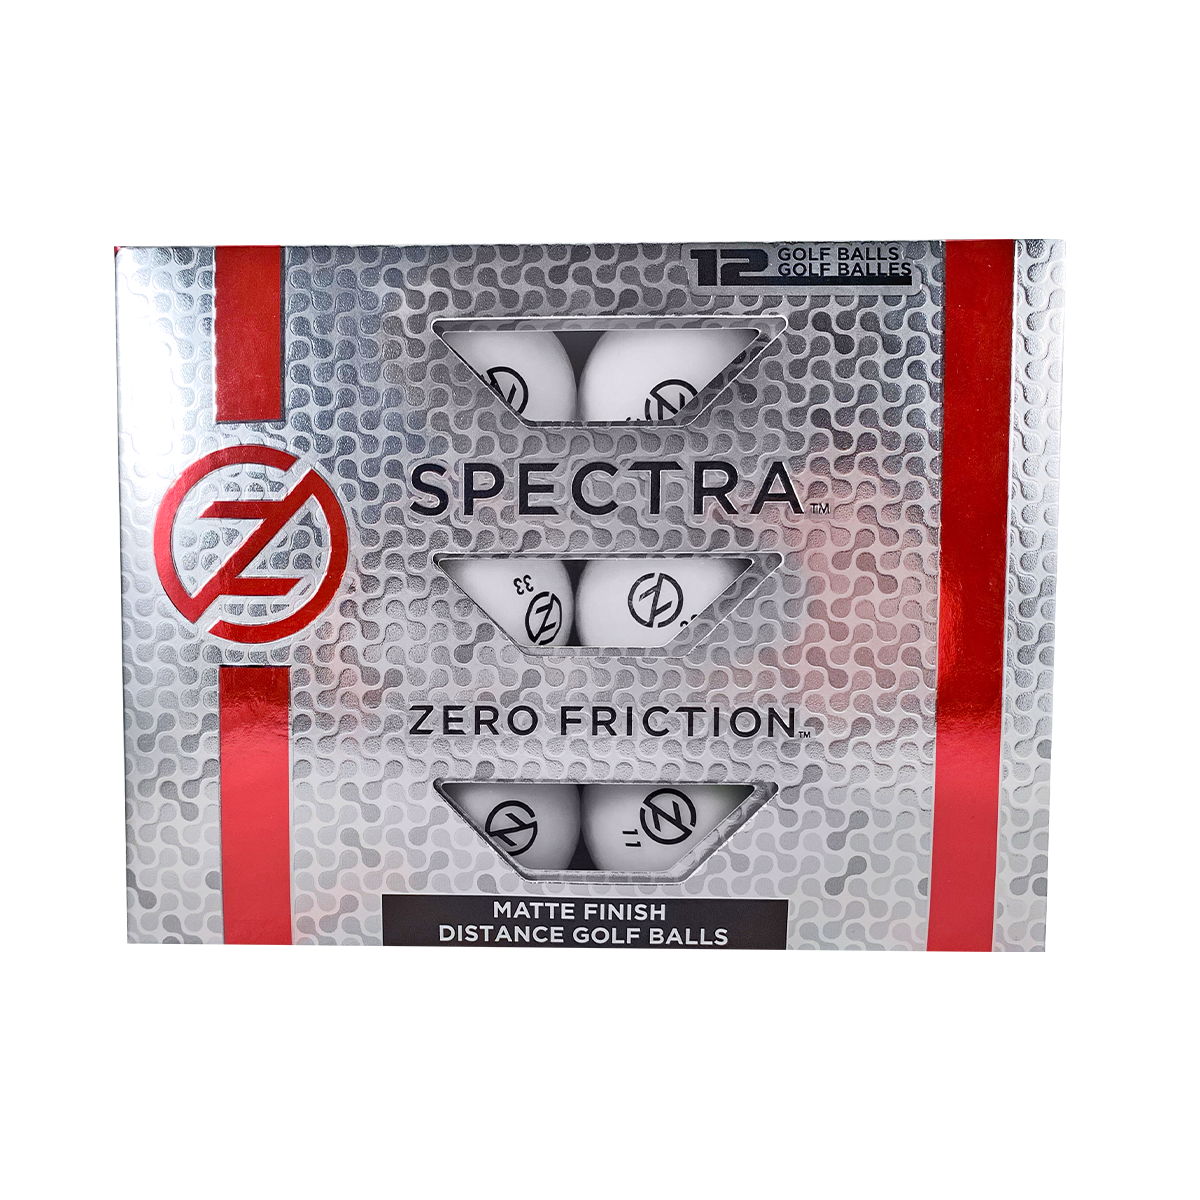 Zero Friction Spectra Matte Finish